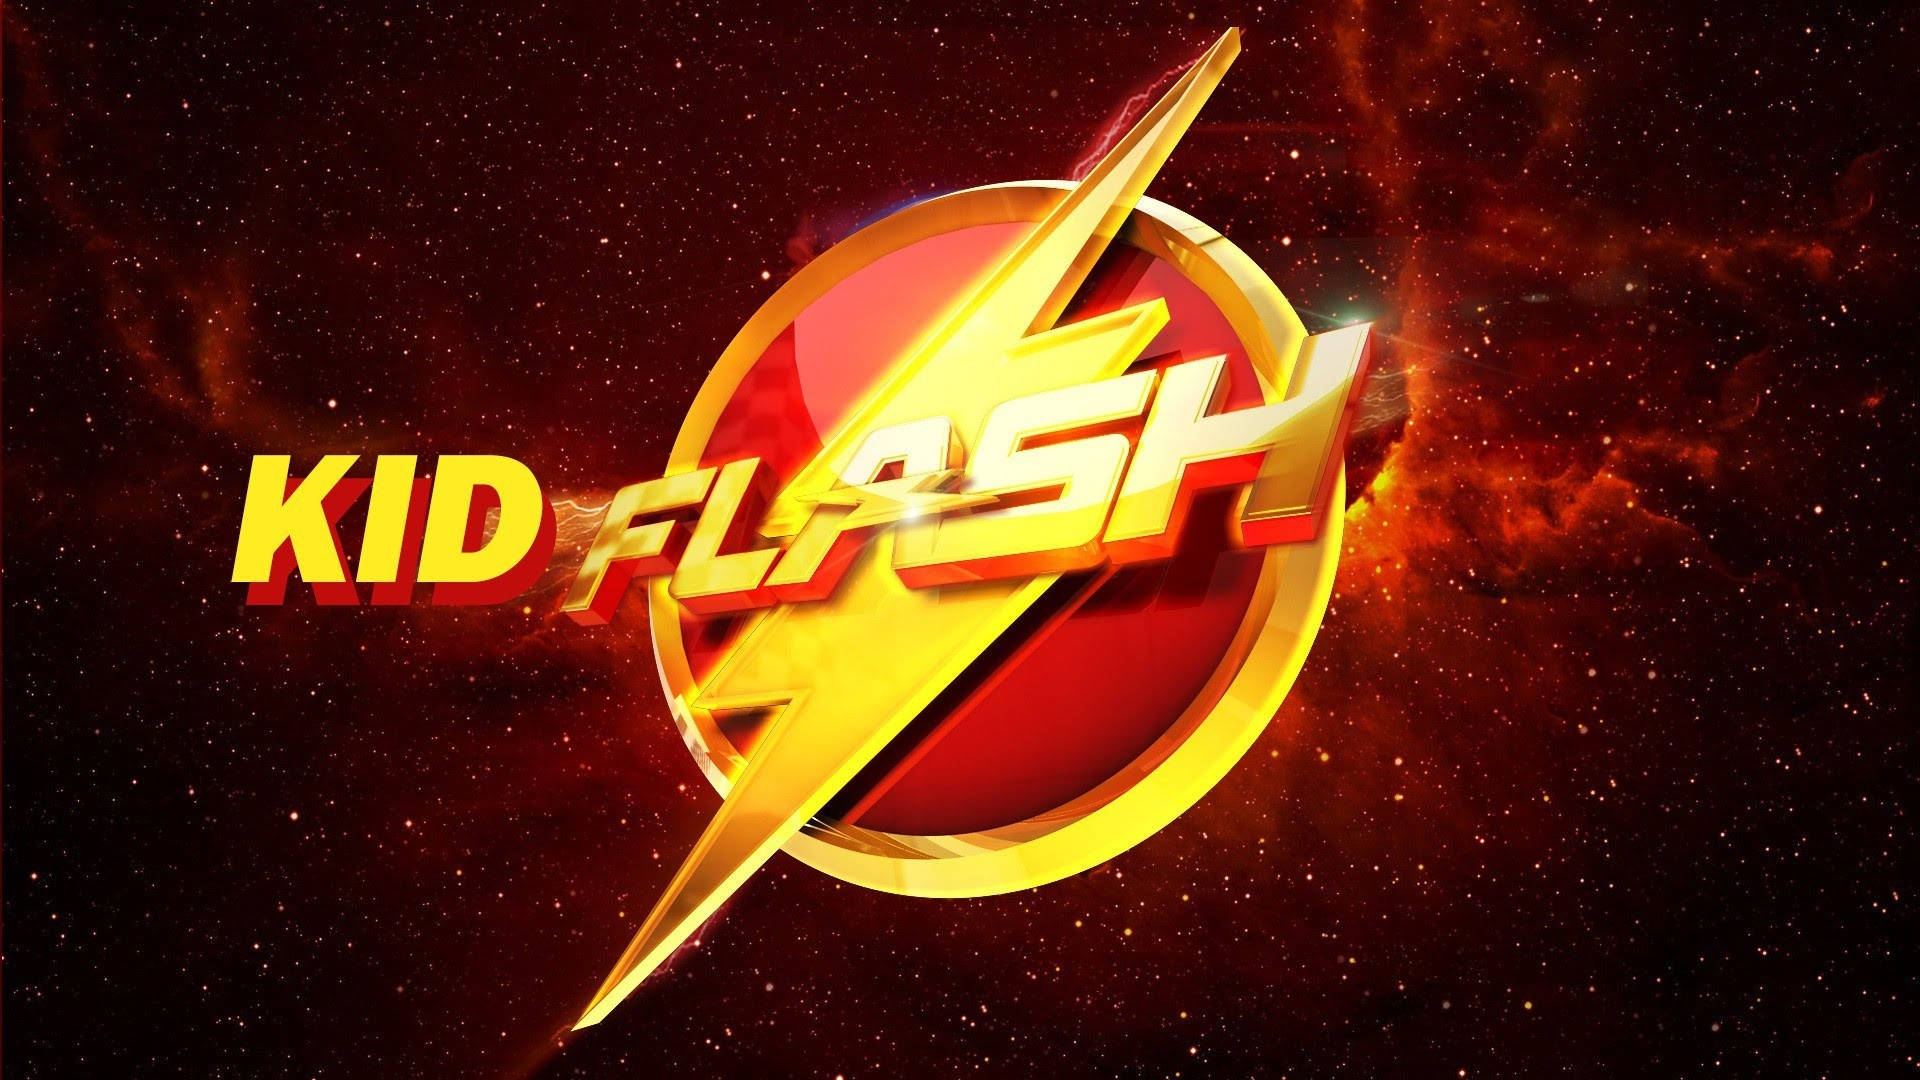 Kid Flash Sign Wallpaper